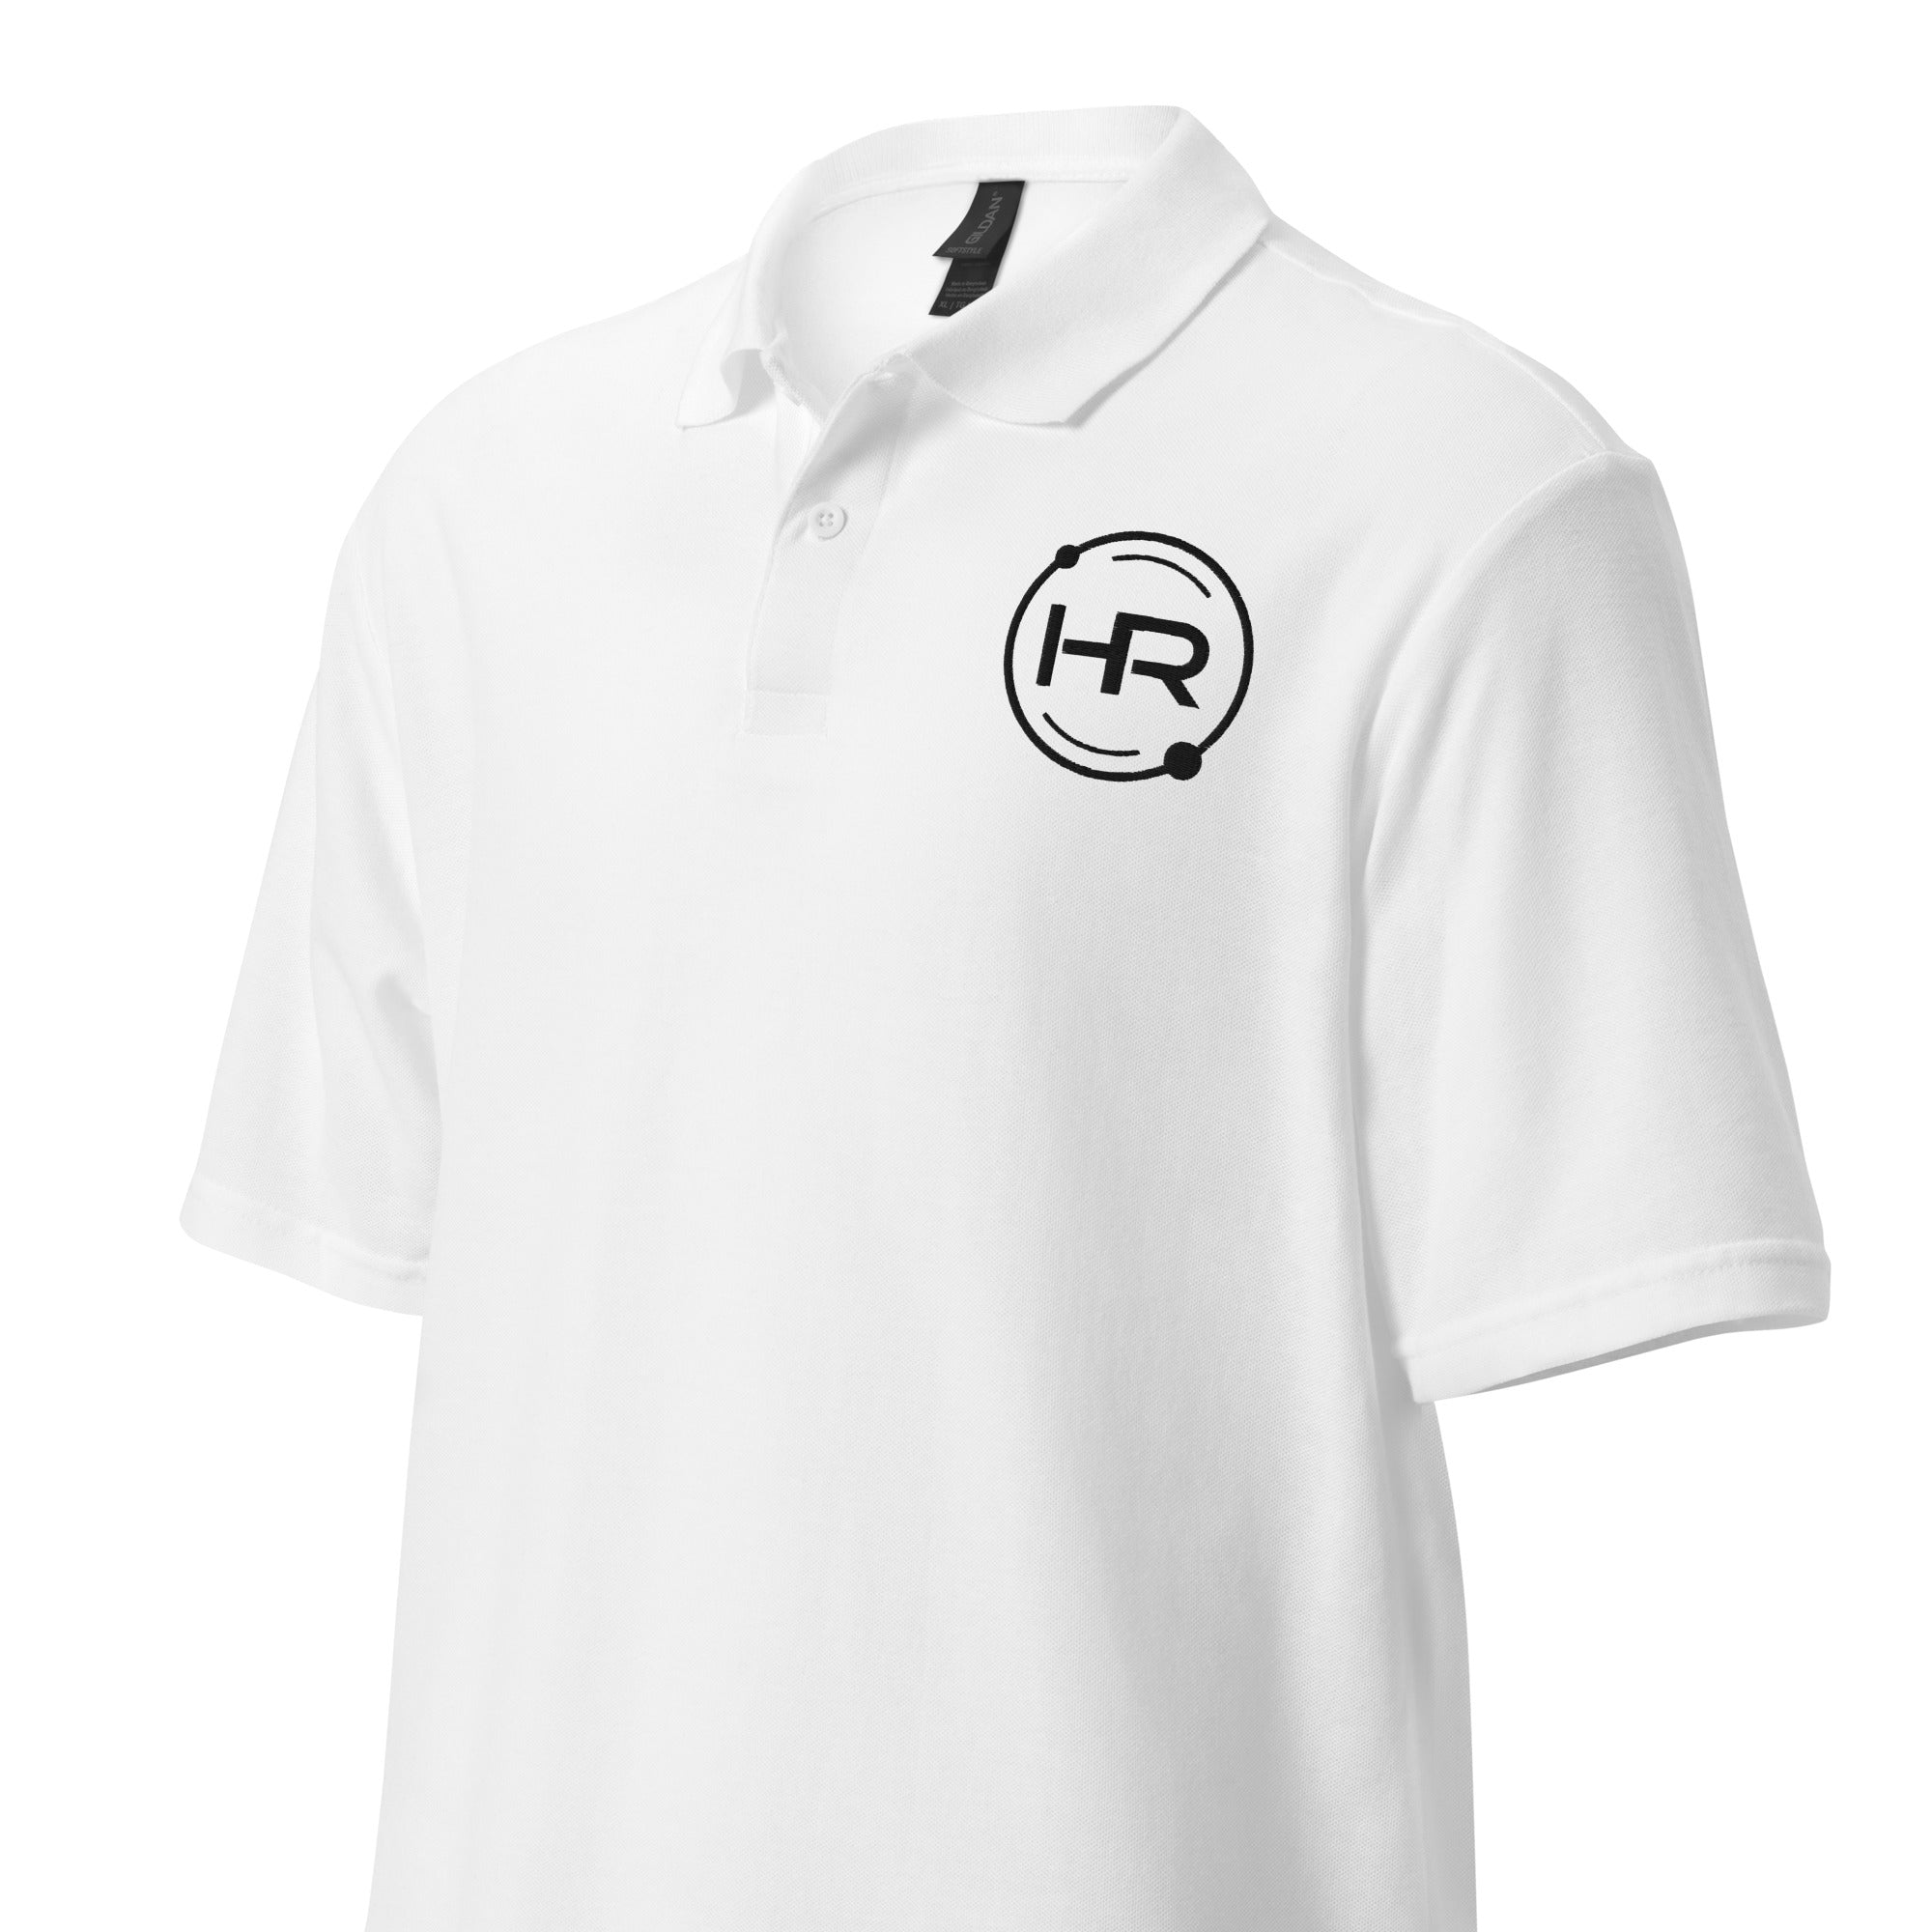 Hyperion Racing Unisex pique polo shirt white